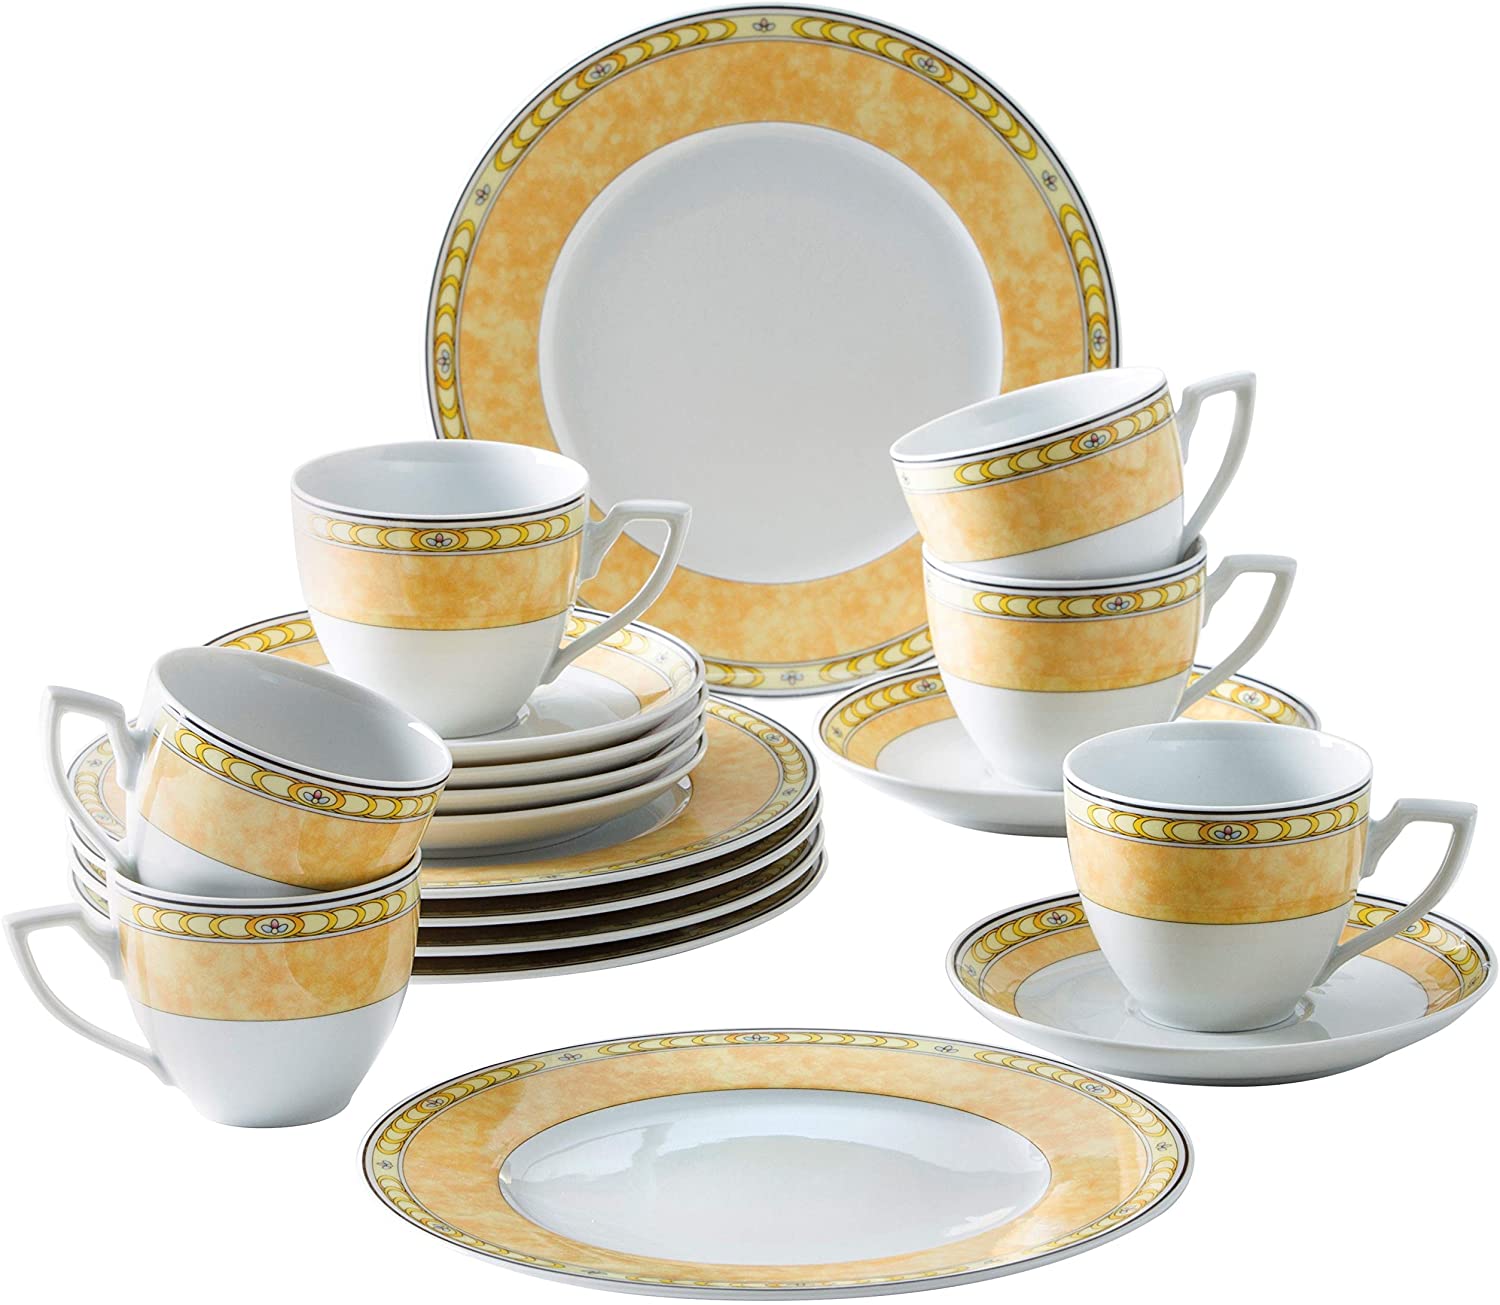 Kahla Yvonne 040104M73996C Yellow Porcelain Crockery Set for 6 People Coffee Service Tea Service Breakfast Cups Plates 18-Piece Coffee Set